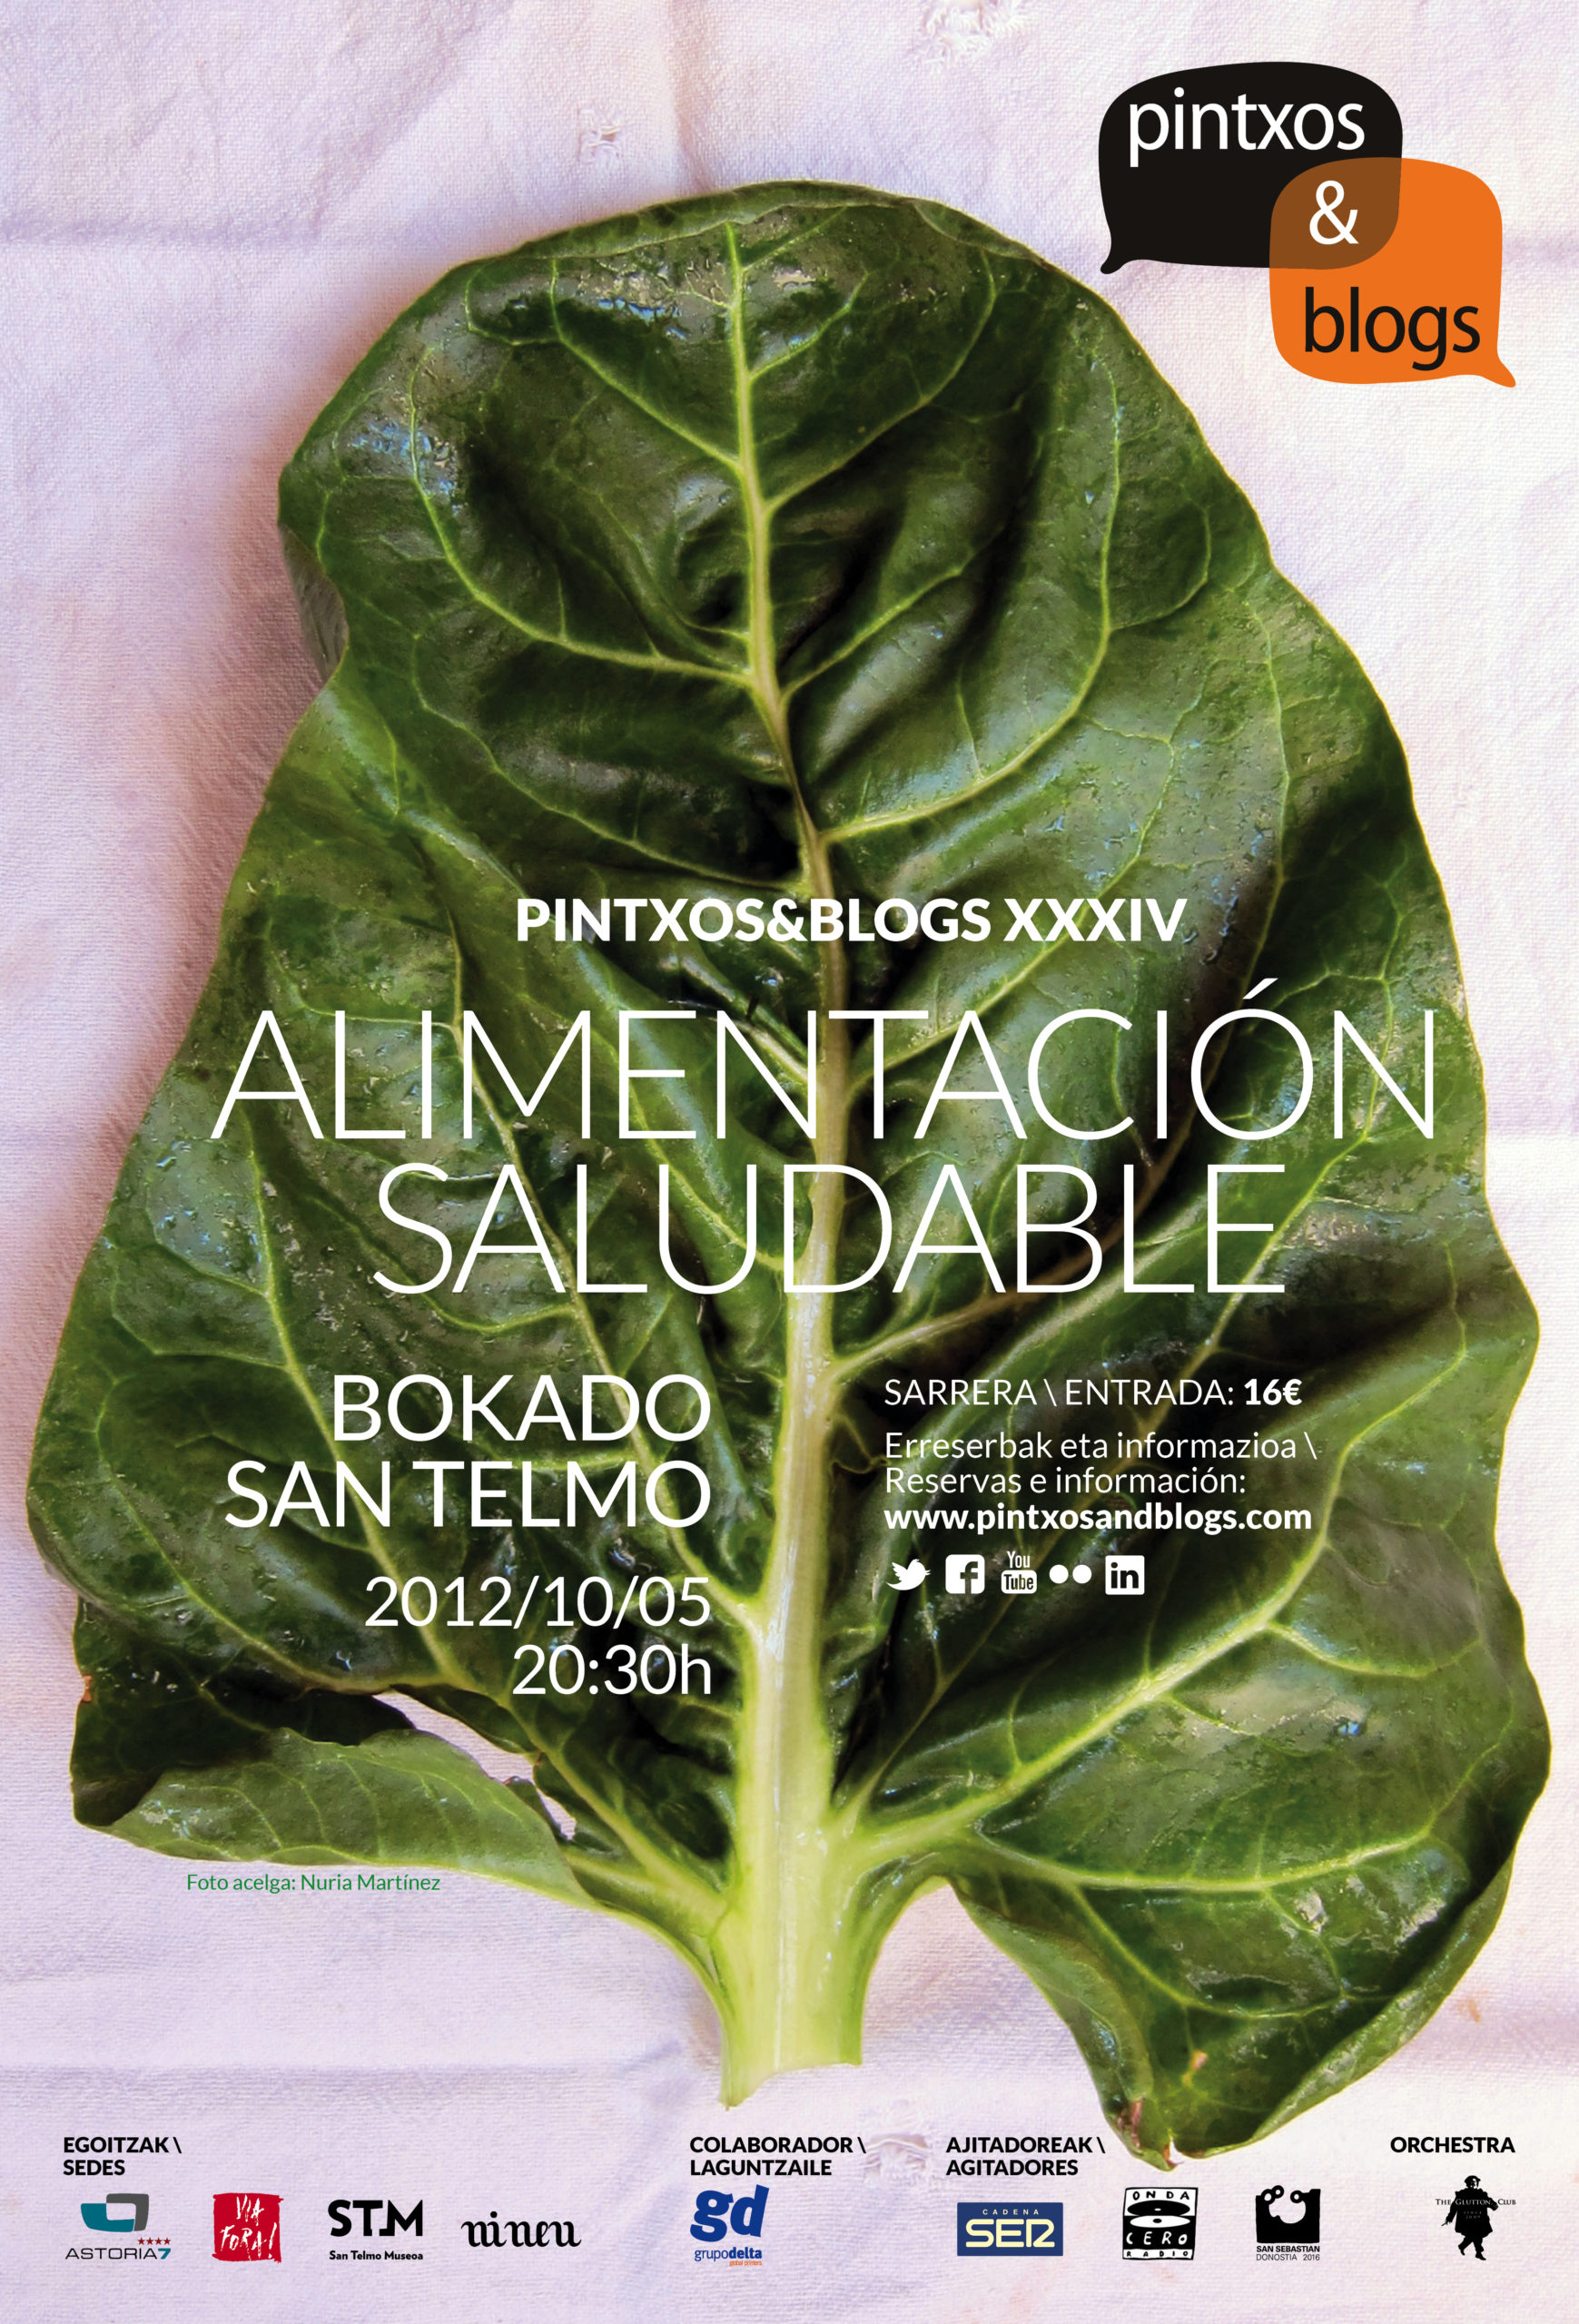 Pintxos&Blogs XXXIV. Alimentación saludable. 2012.10.05, Bokado San Telmo